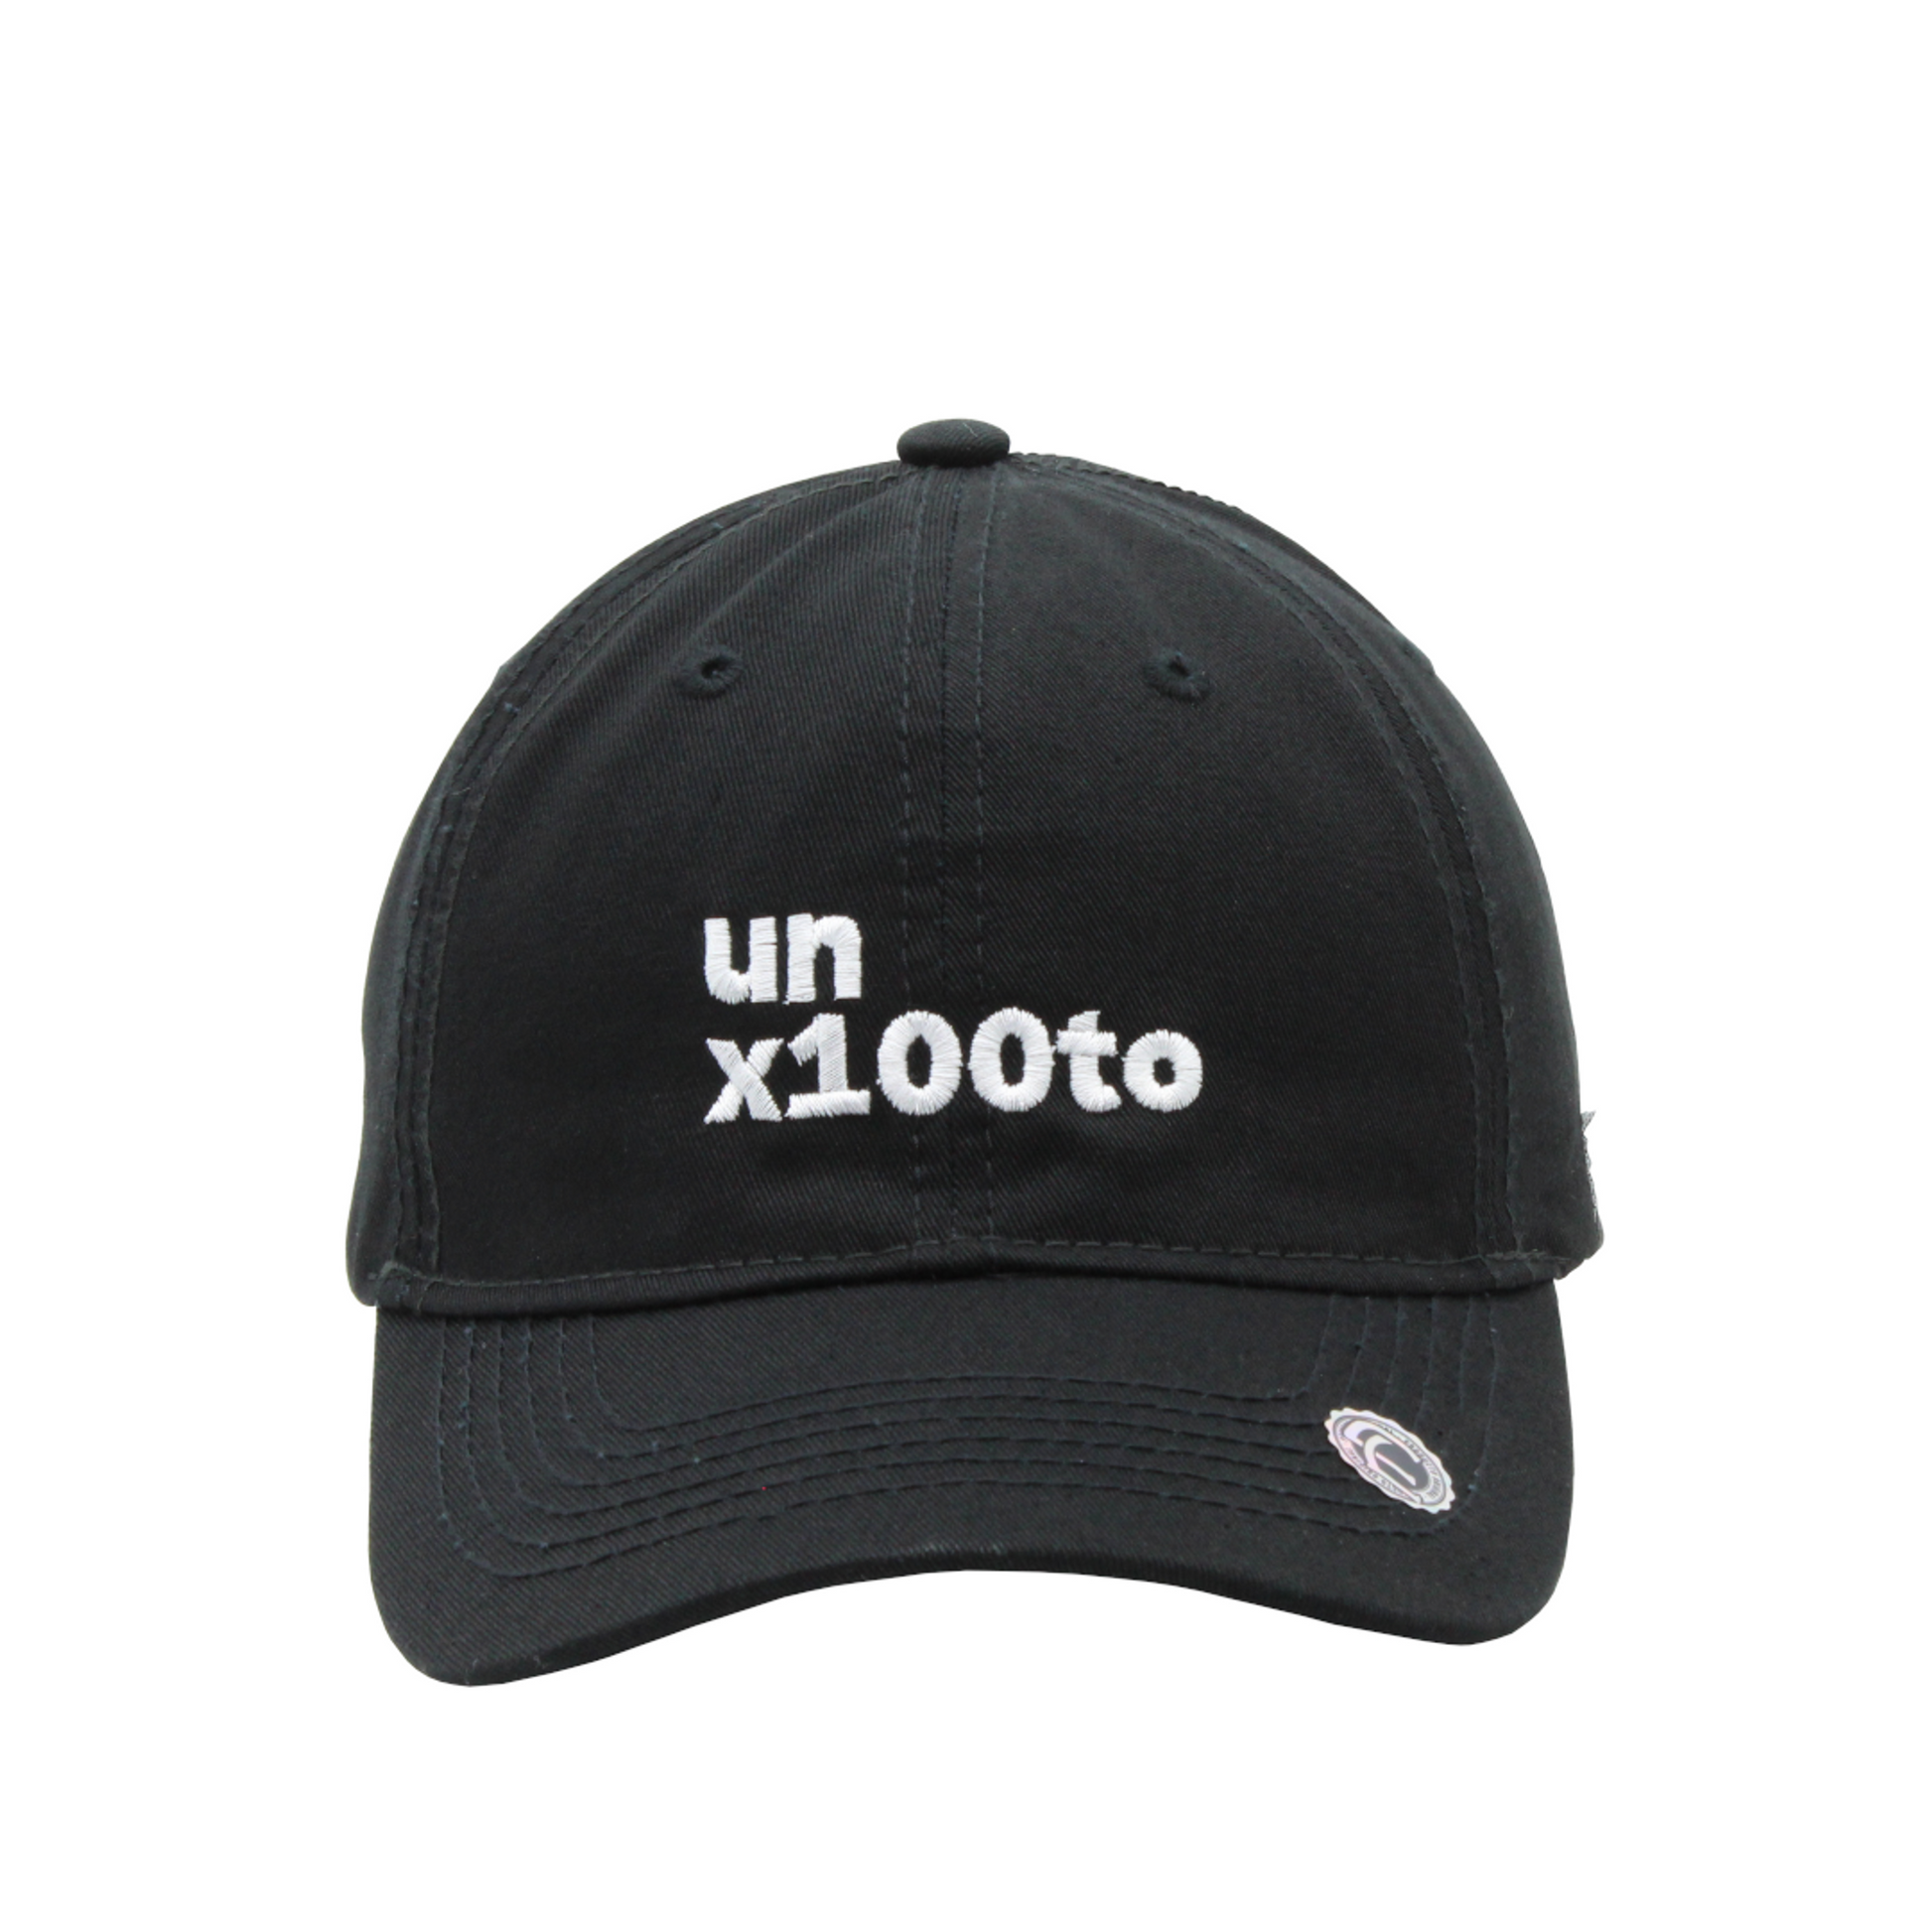 Unx100to - Cap Land